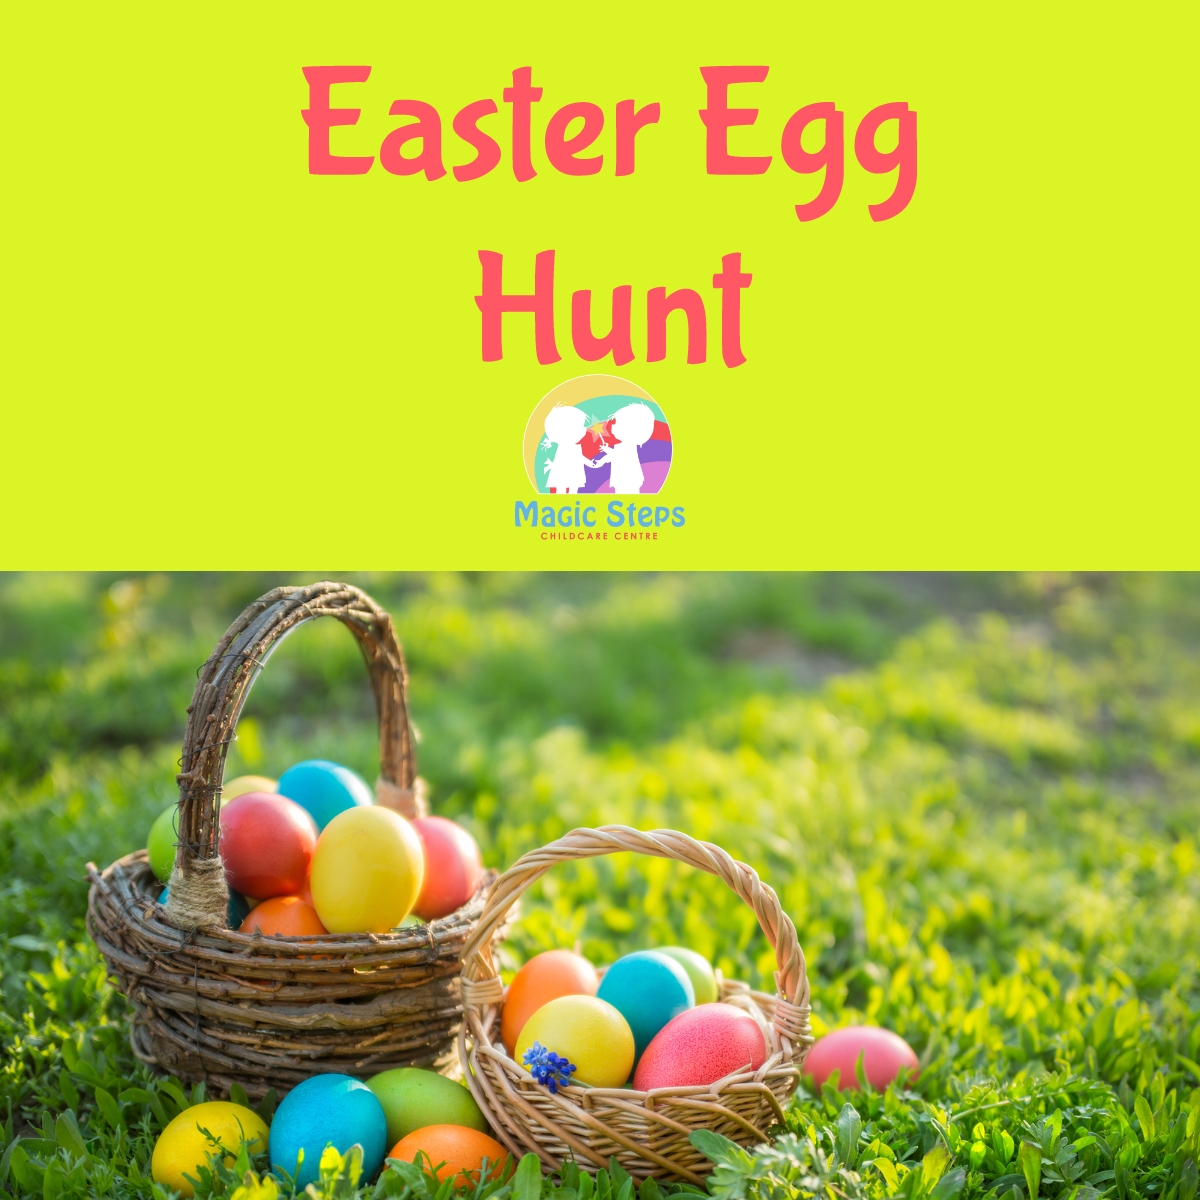 Easter Egg Hunt- Tuesday 12th April